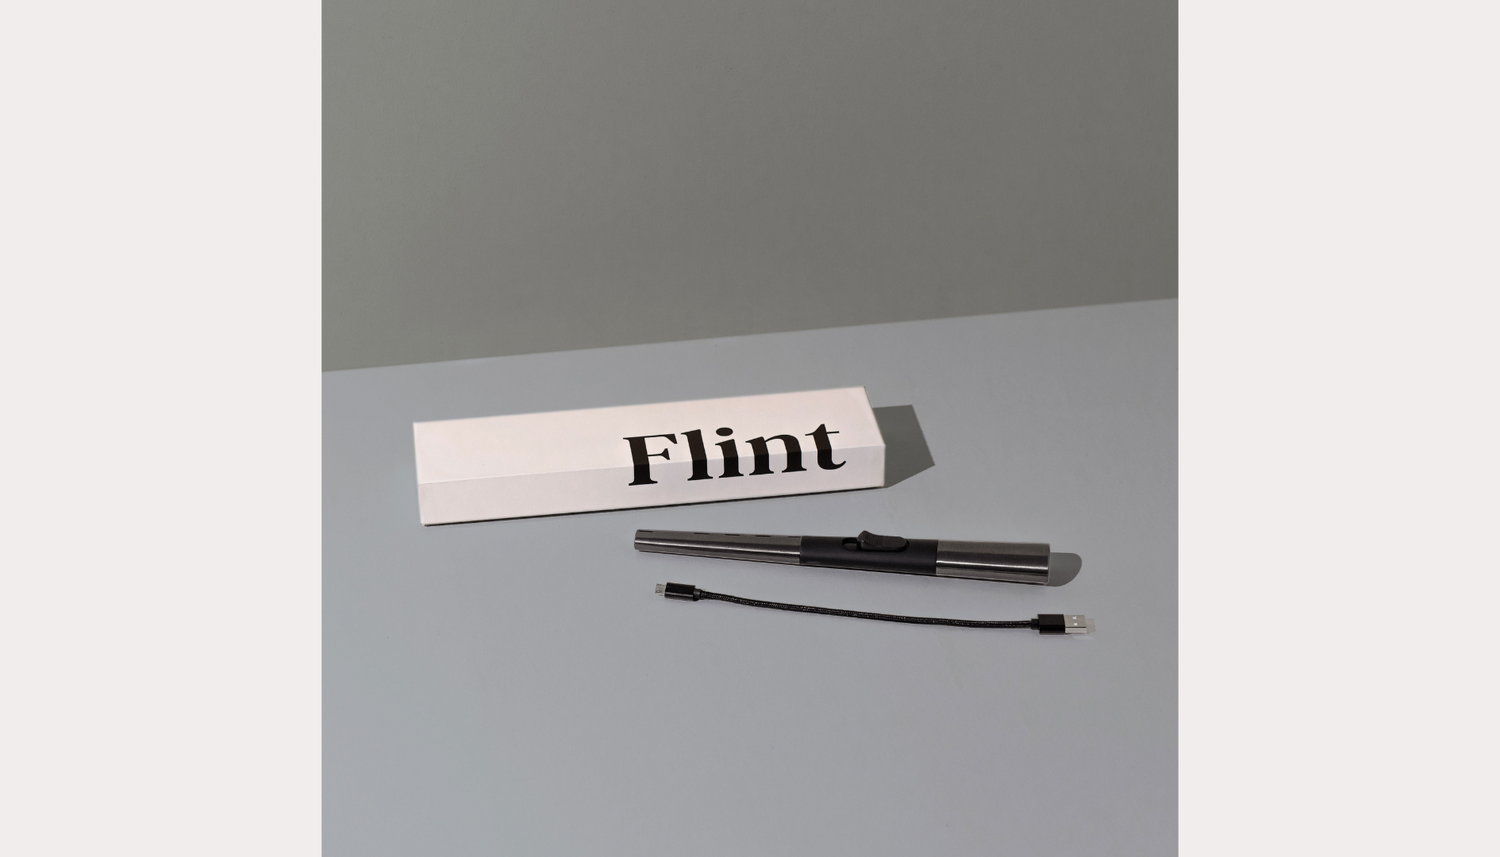 Flint Electric Candle Lighter - Gunmetal